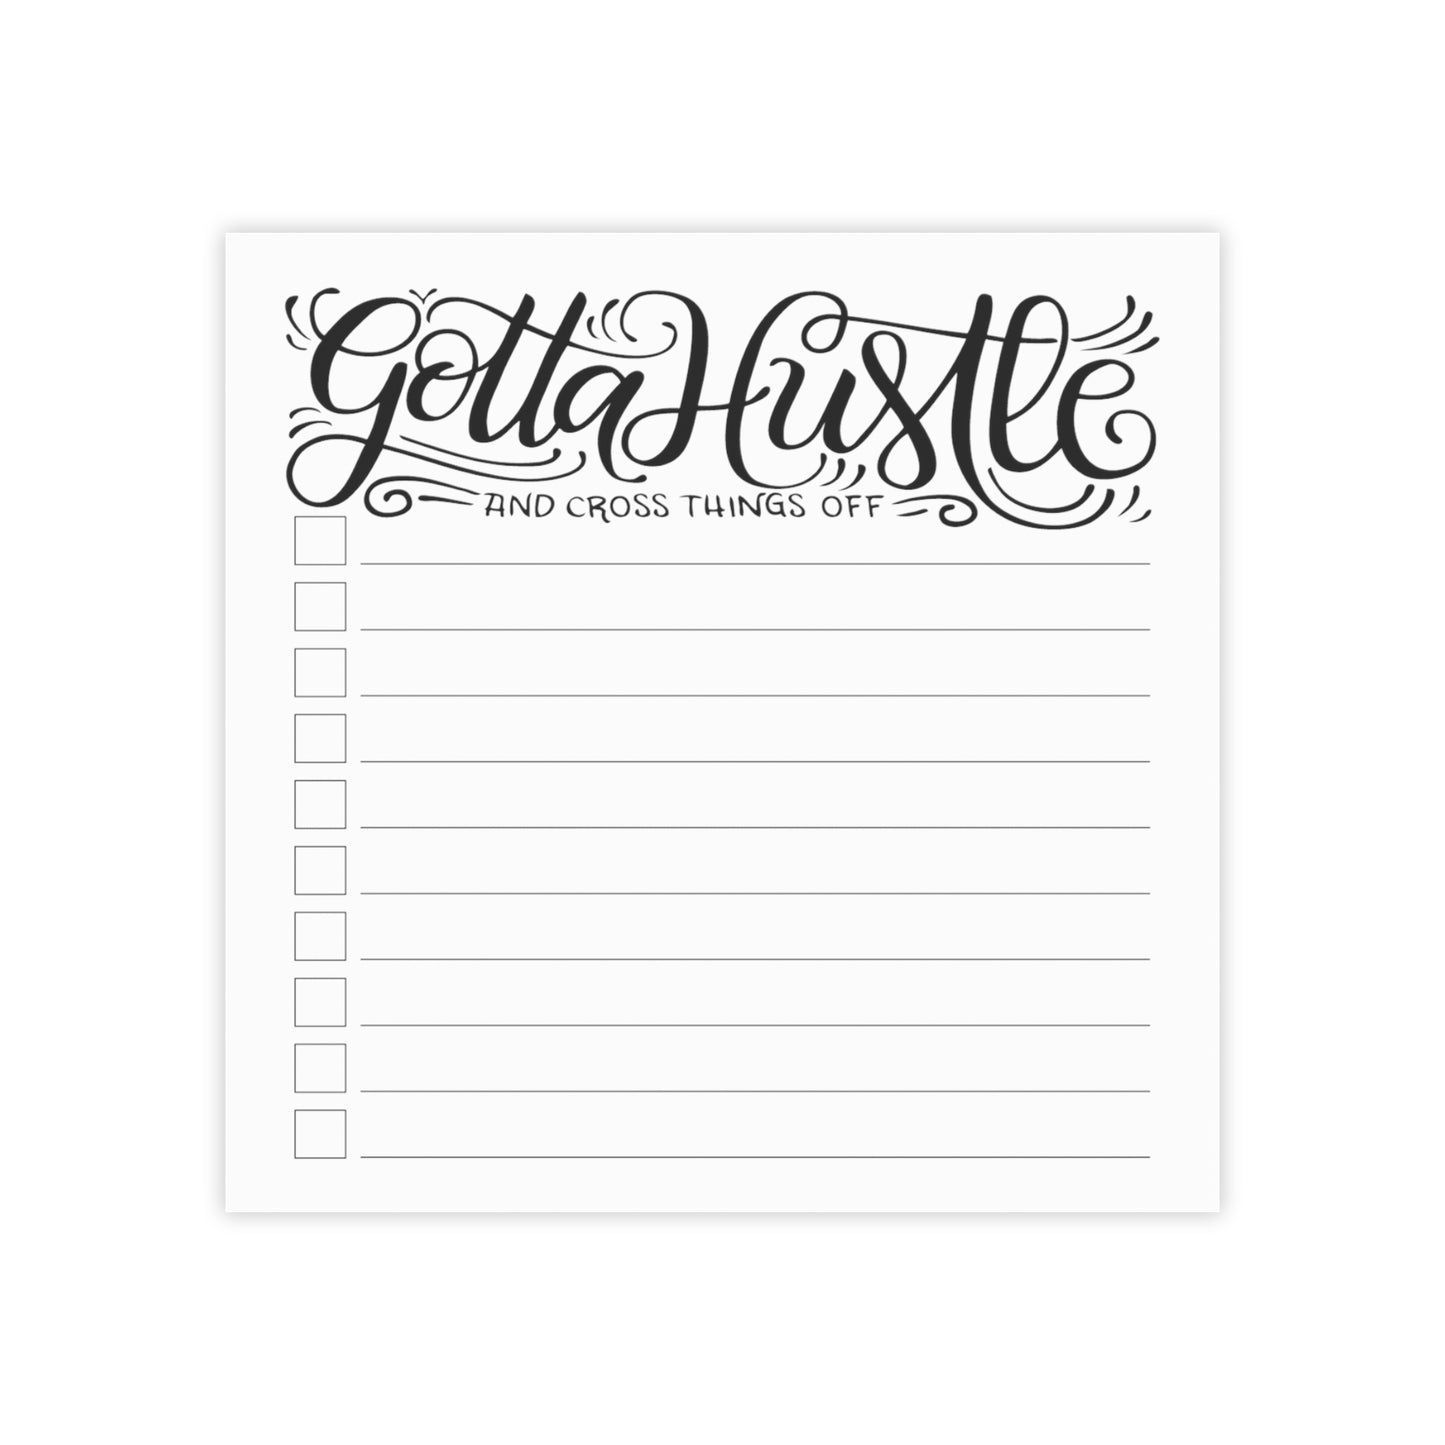 Gotta hustle, and cross things off List - Post-it® Note Pad - howjoyfulshop